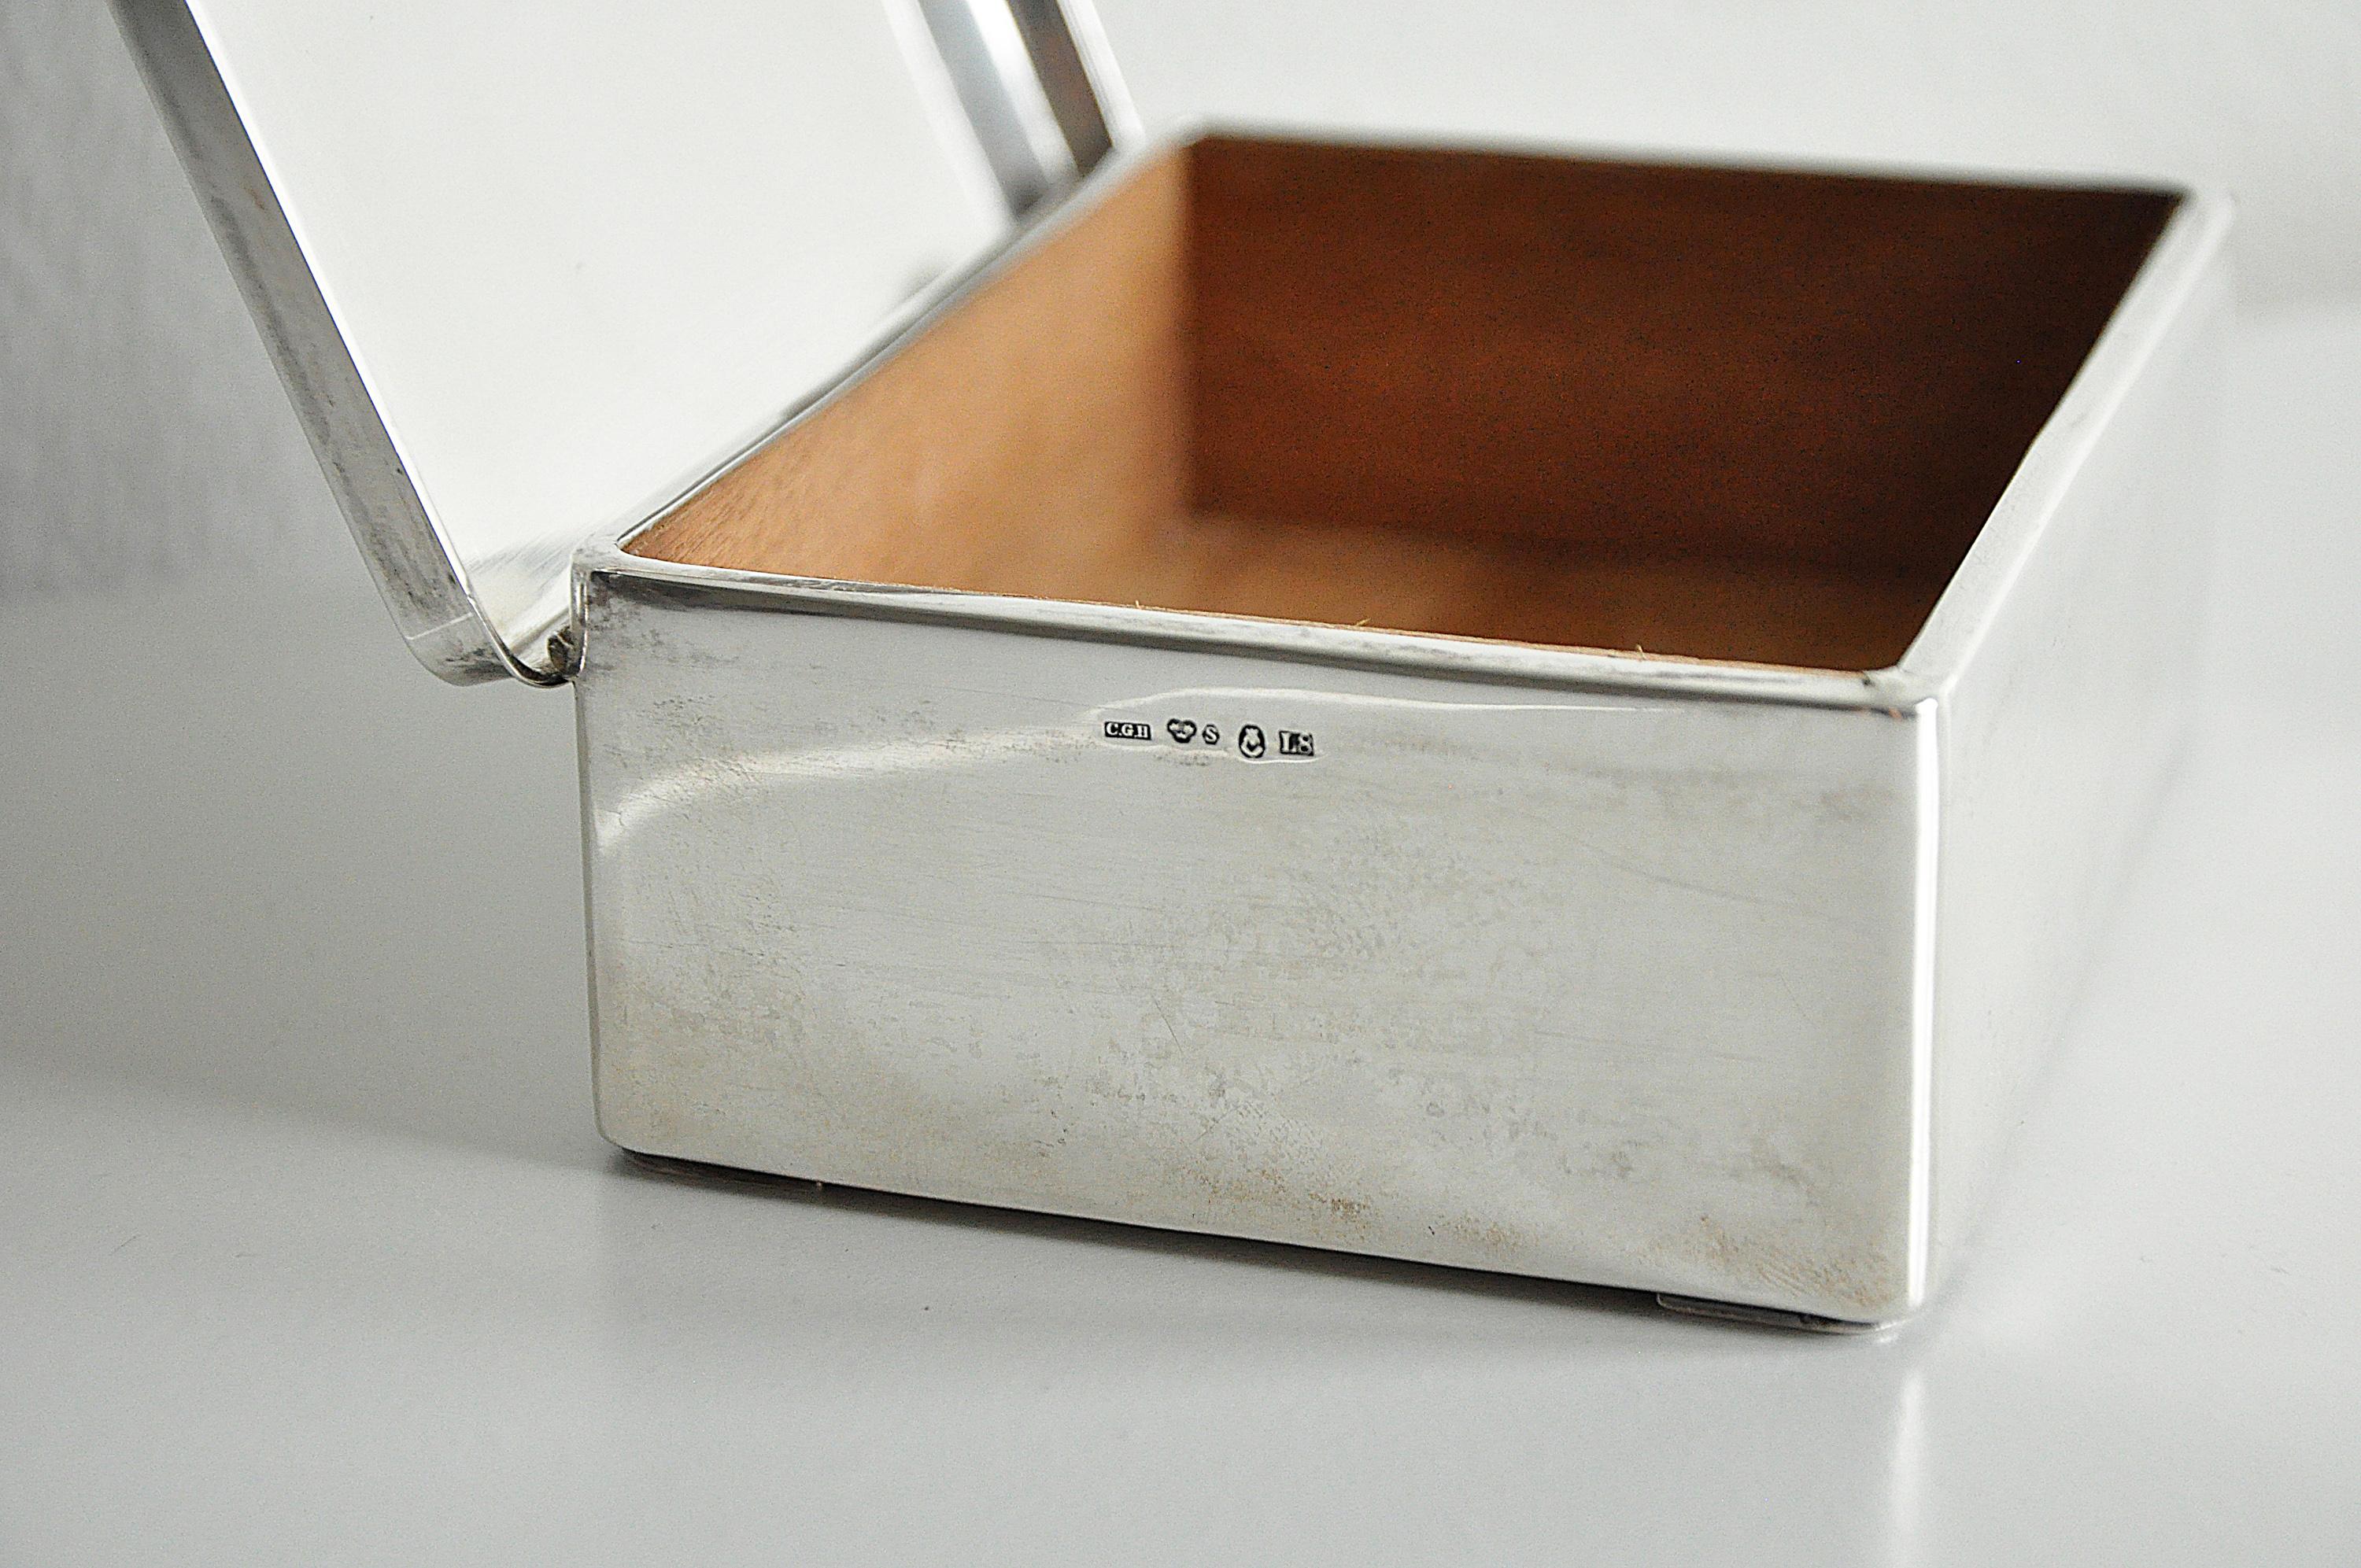 Mid-20th Century Scandinavian Modern Silver Box from C. G. Hallberg, Sweden -1937 For Sale